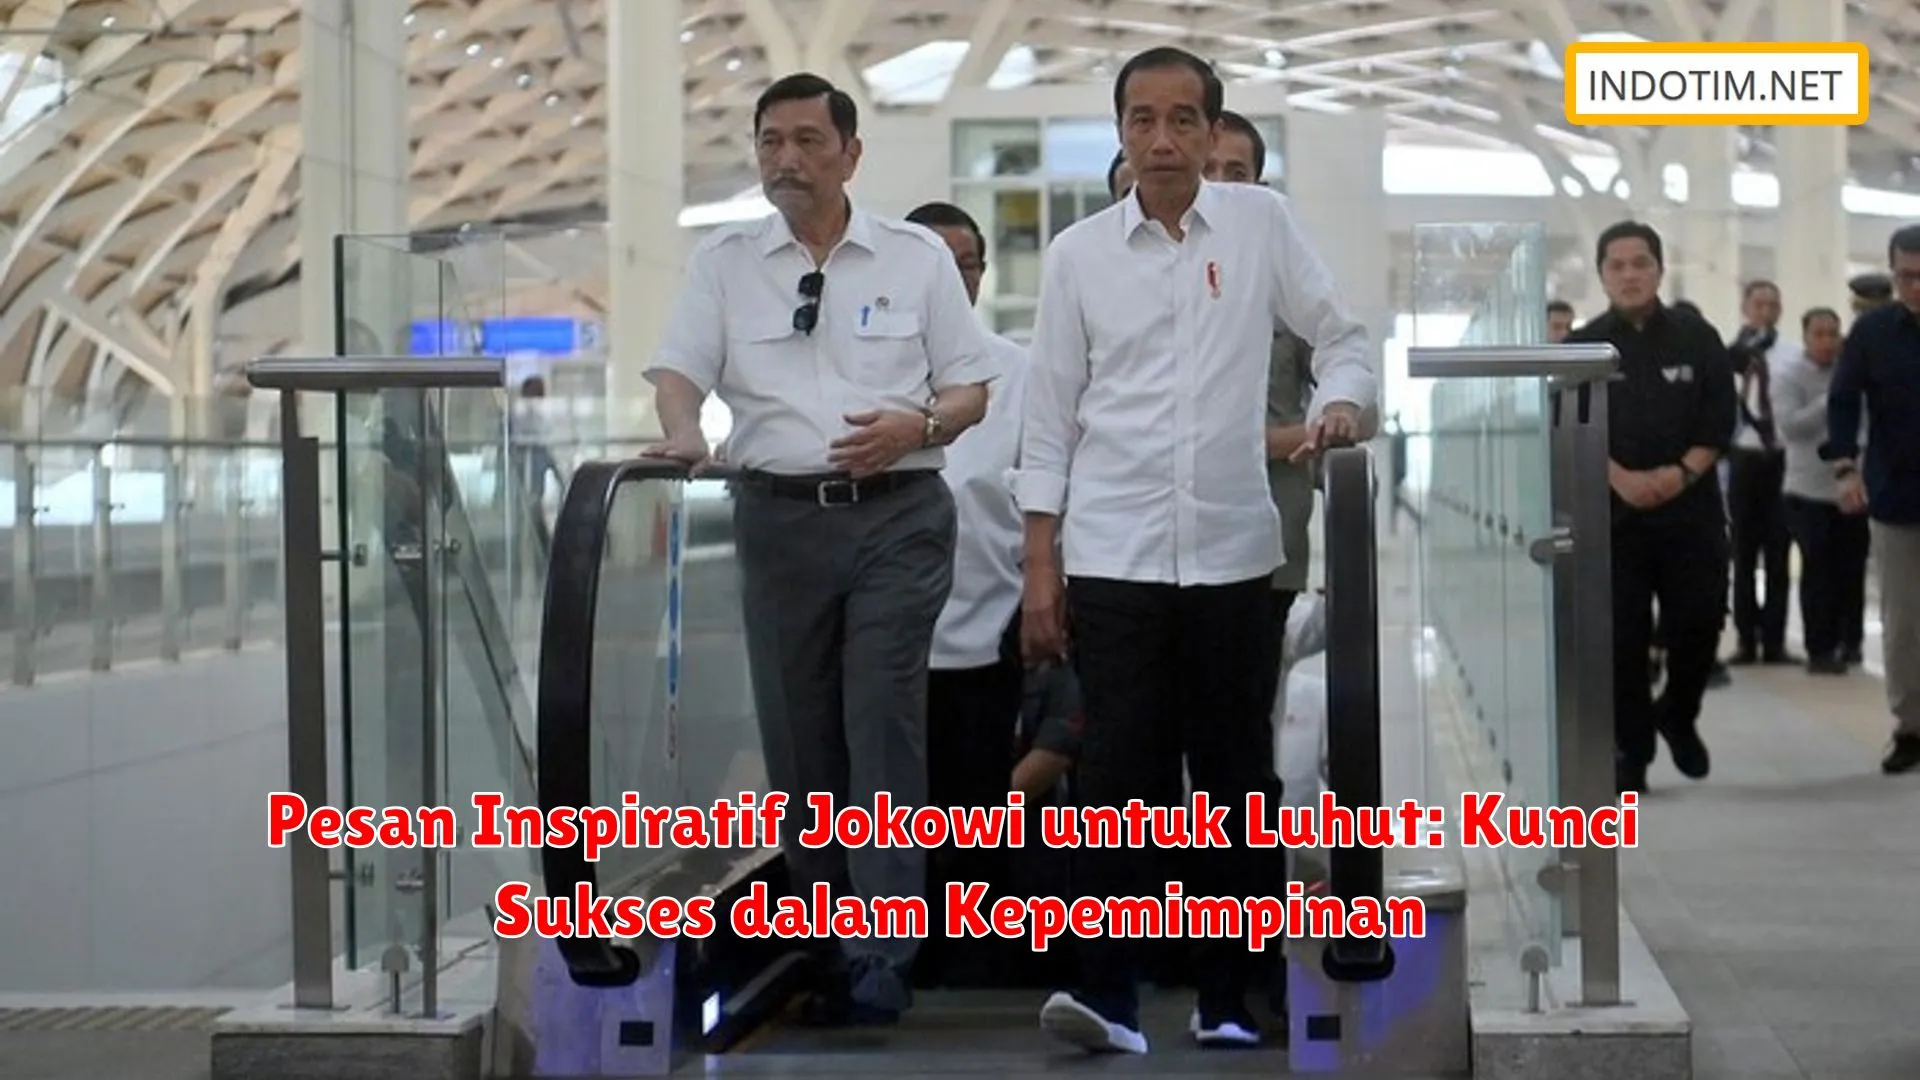 Pesan Inspiratif Jokowi untuk Luhut: Kunci Sukses dalam Kepemimpinan